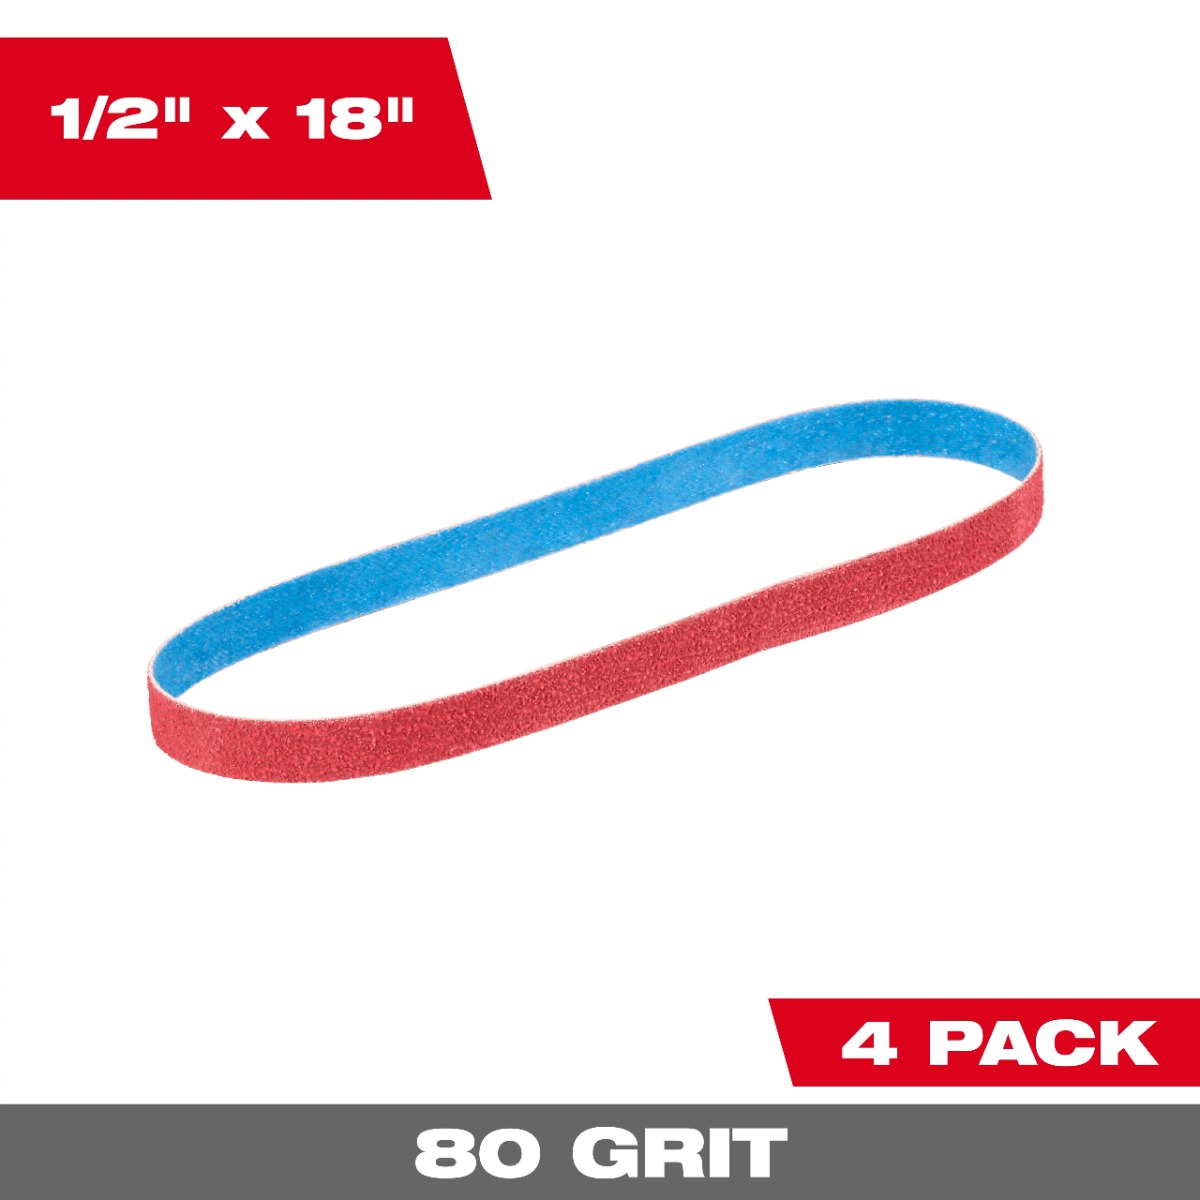 1/2” x 18” 80 Grit Bandfile Belts – 4 pack